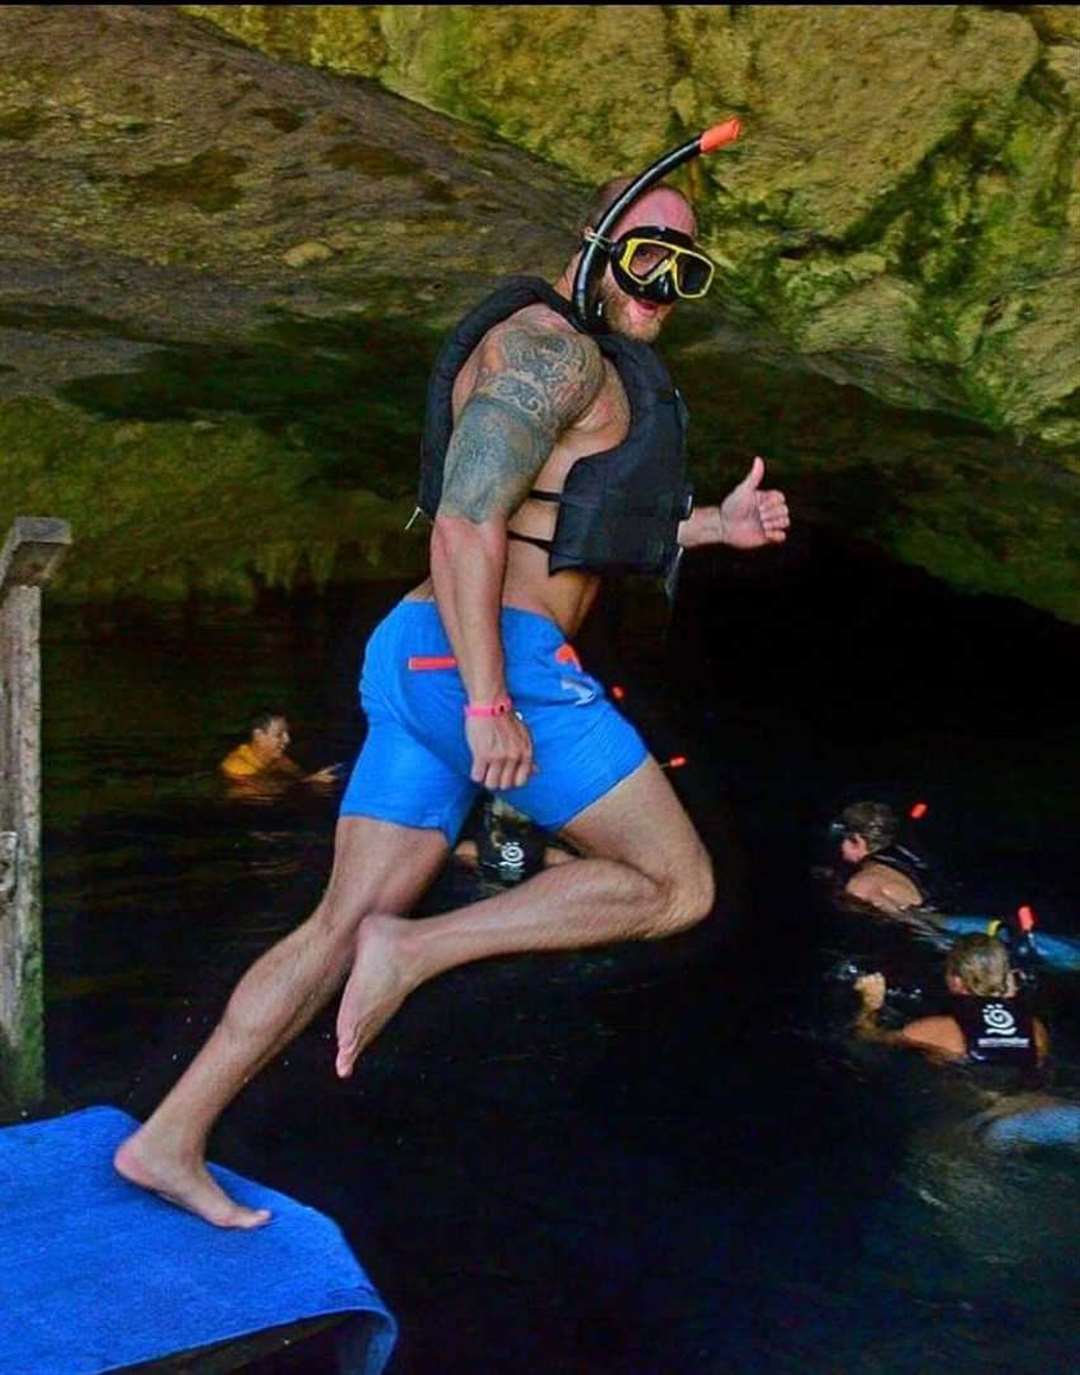 Luke Foster enjoying a snorkelling trip on holiday. Photo credit: Lisa Forbes